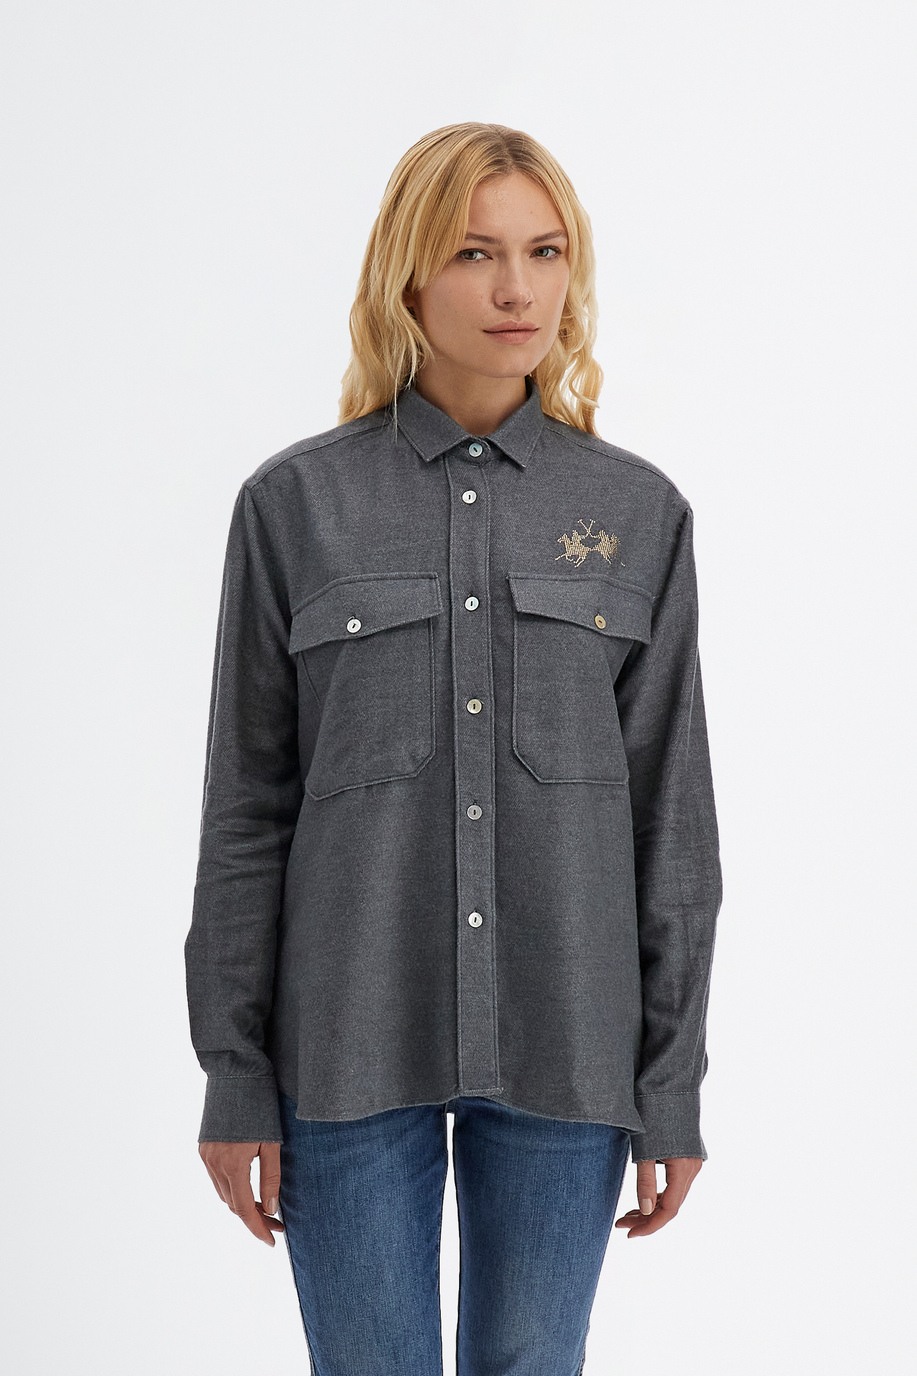 Women’s flannel shirt Timeless regular fit long sleeves - Autumn style | La Martina - Official Online Shop